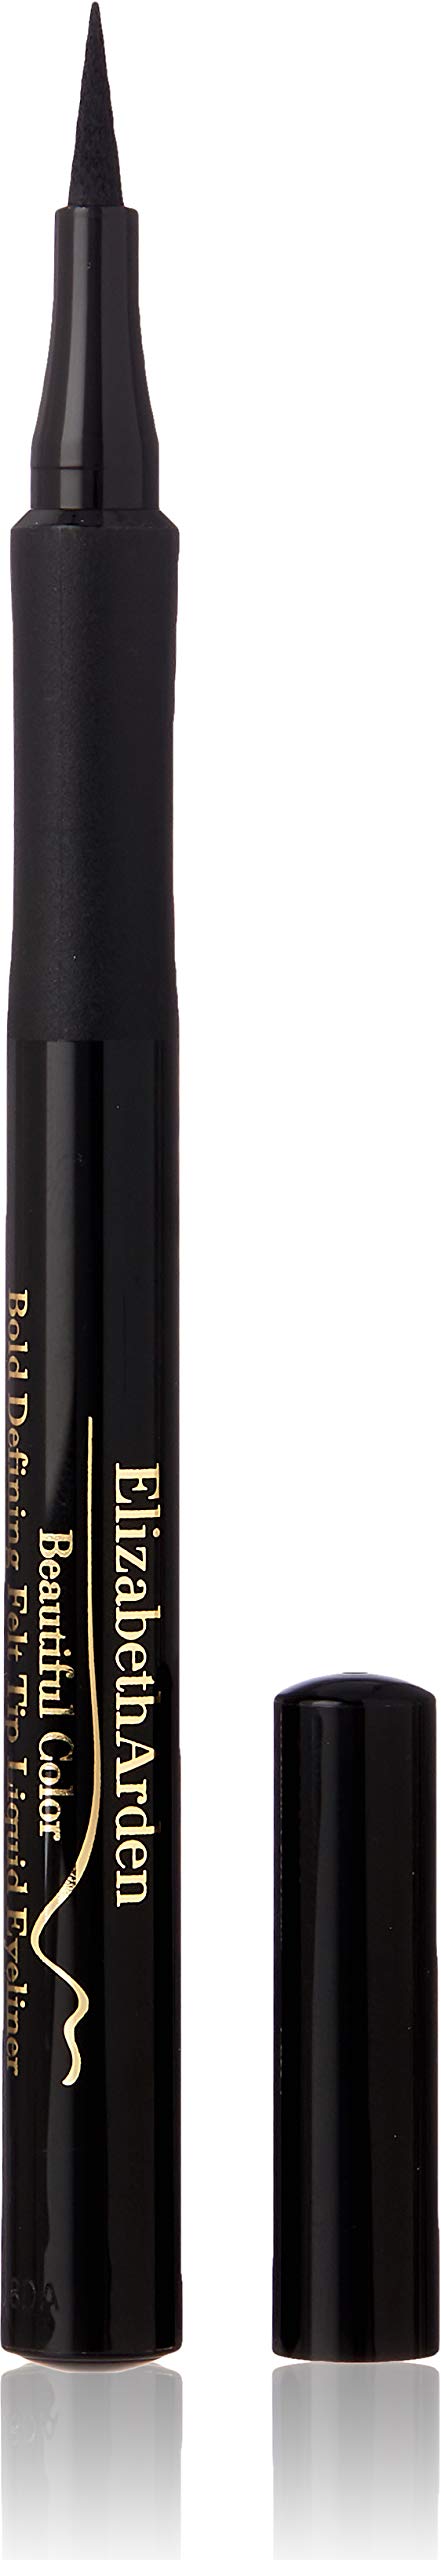 Elizabeth Arden Beautiful Color Bold Defining Felt Tip Liquid Eyeliner, Seriously Black